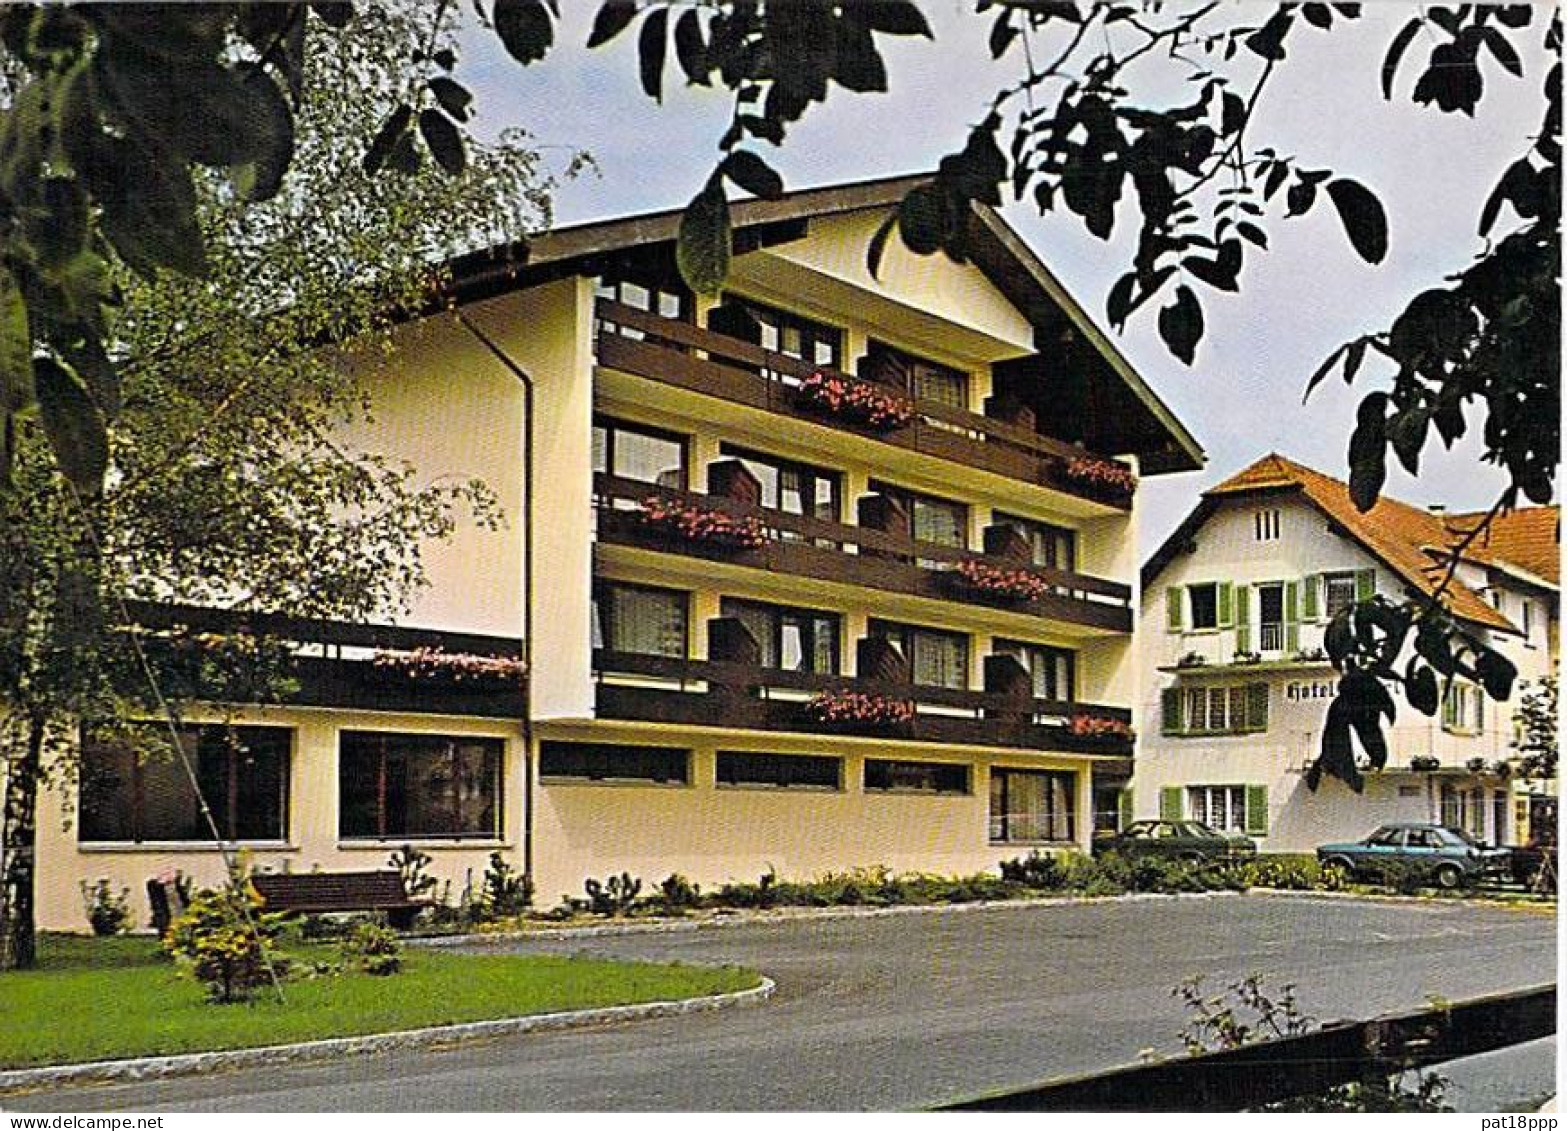 ÖSTERREICH Autriche - Lot de 35 CPSM GF HOTEL RESTAURANT : 7 LANDS hors TIROL Tyrol (0.11 € / carte) Austria Oostenrijk